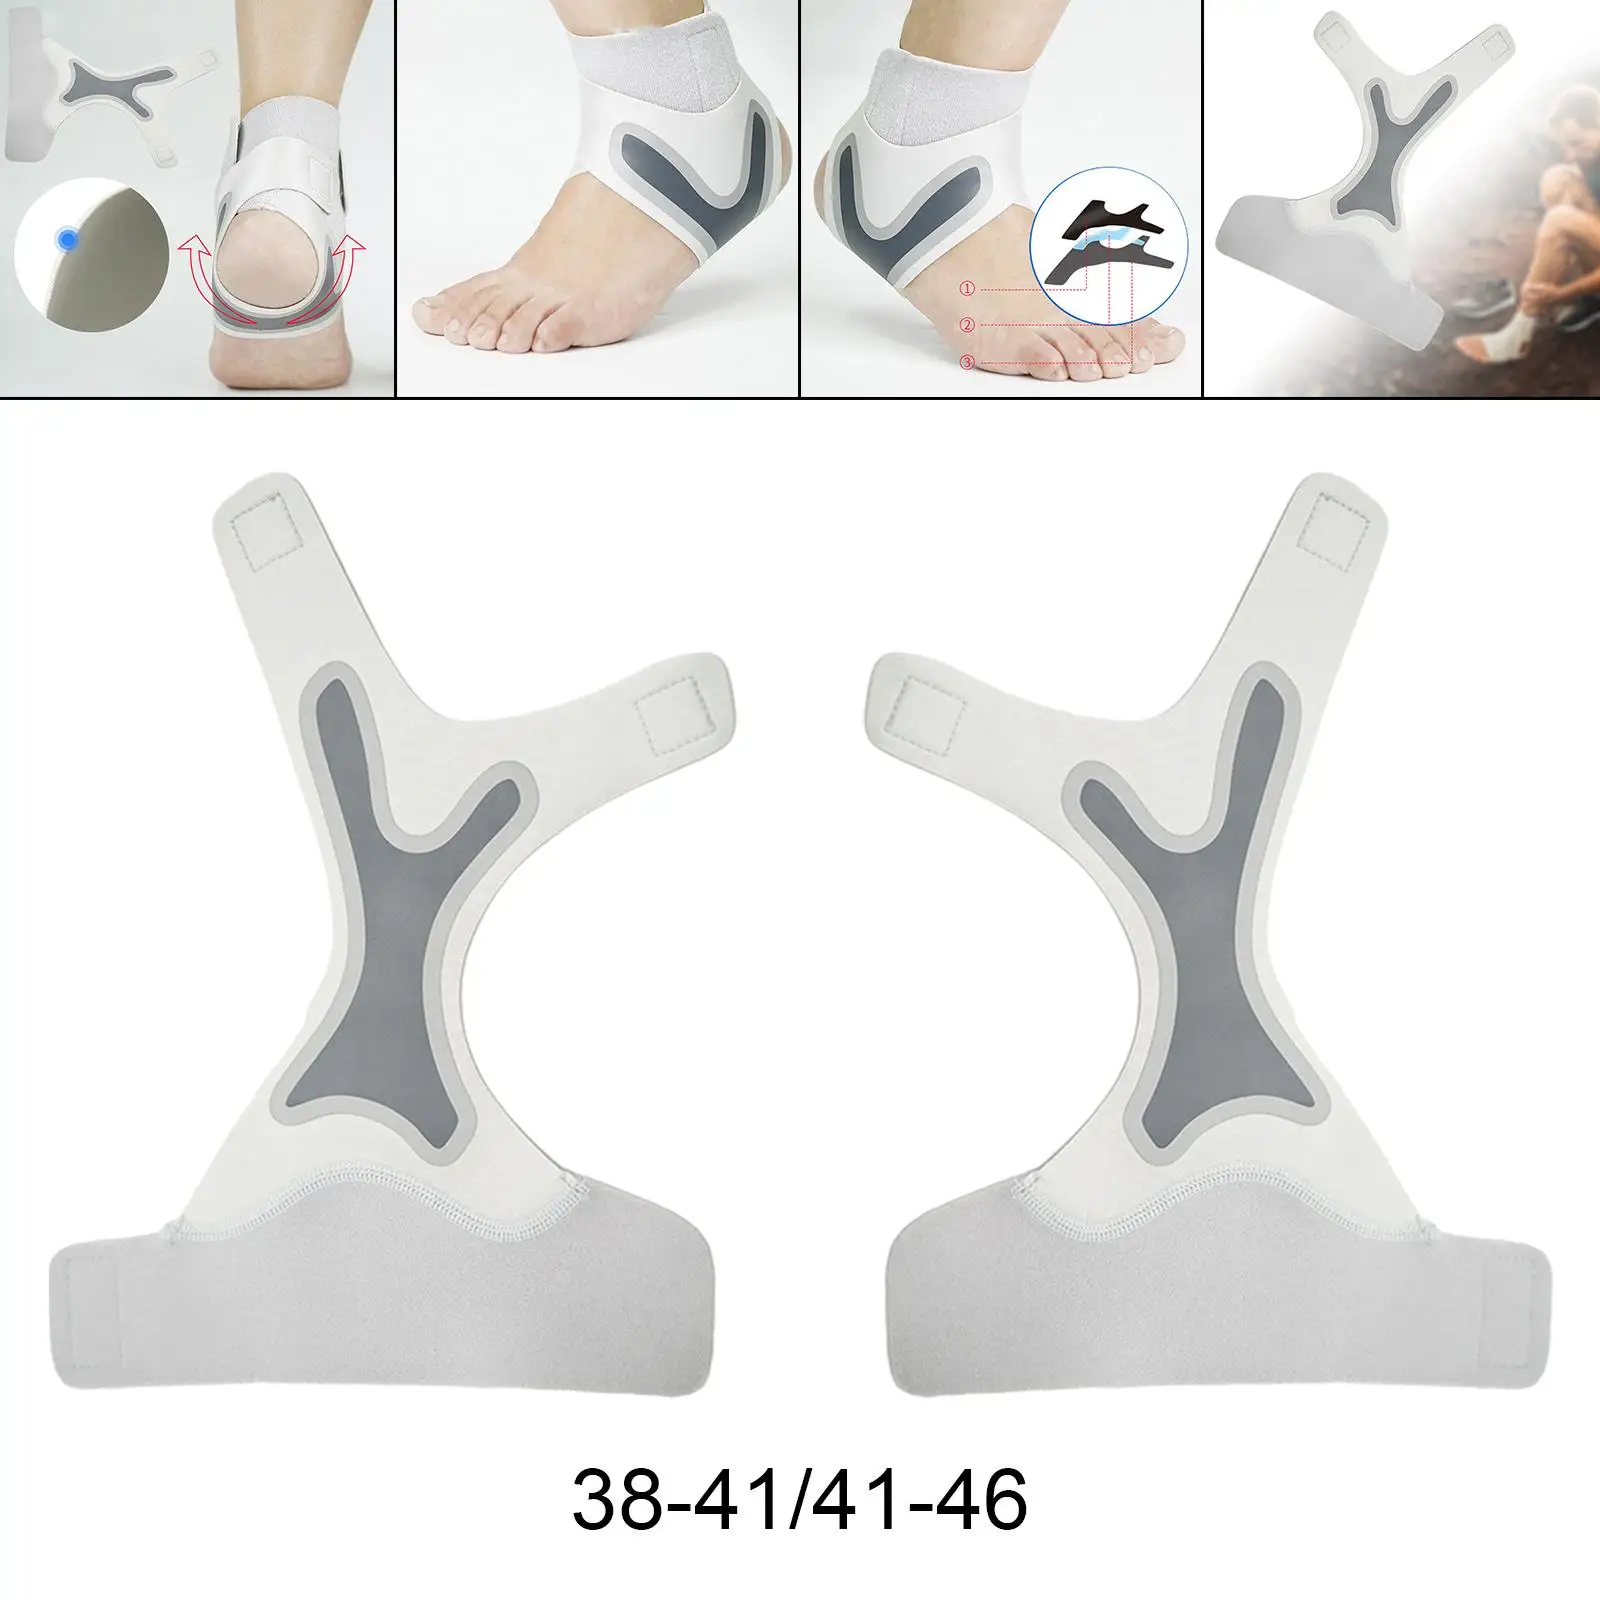 Breathable Ankle Brace Compression Sleeve   Women Men Foot Wrap